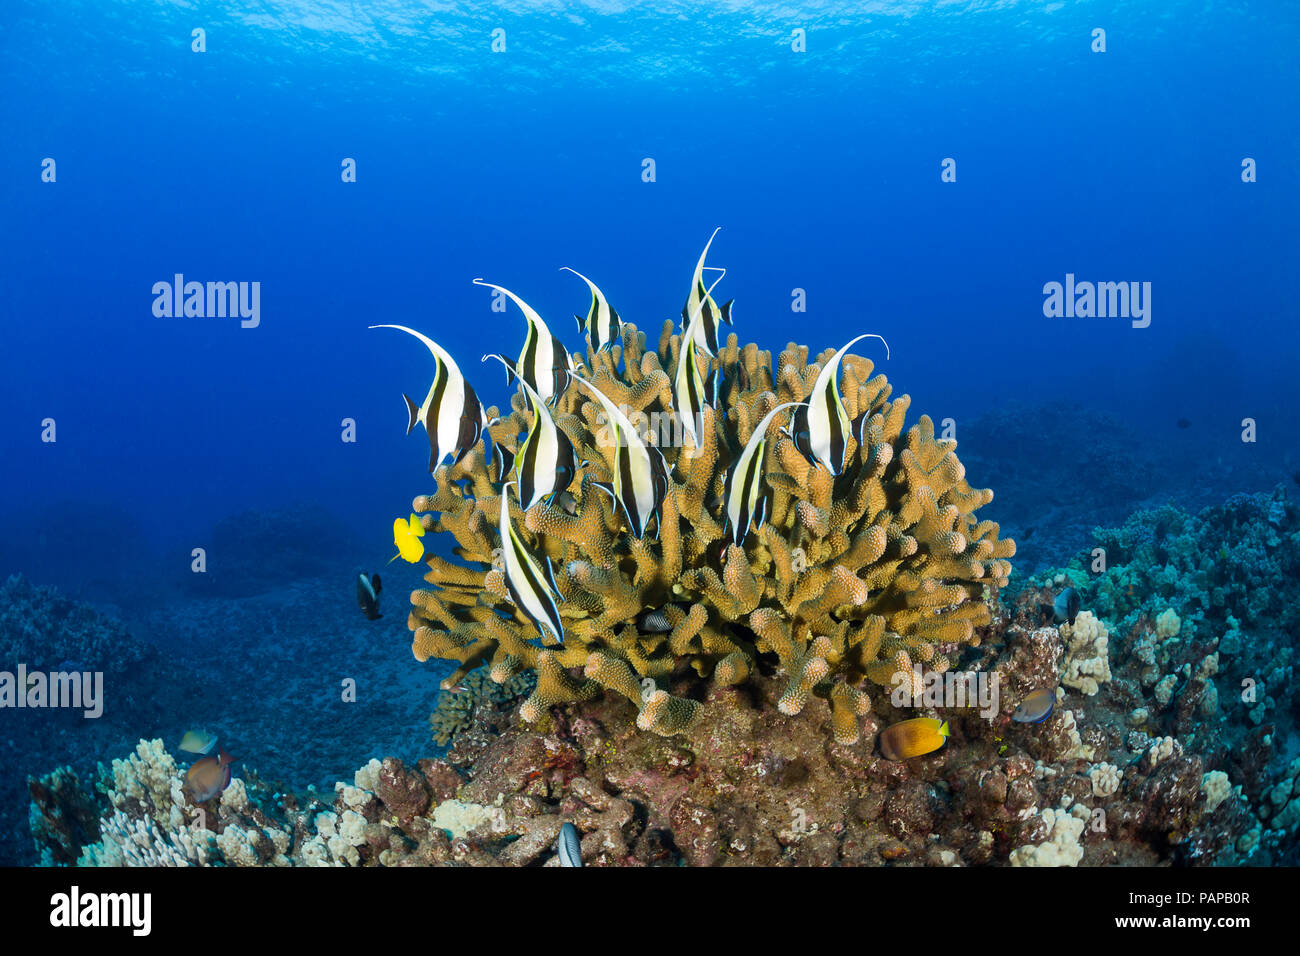 A school of moorish idol, Zanclus cornutus, circle a colony of antler coral, Pocillopora eydouxi, Hawaii. Stock Photo